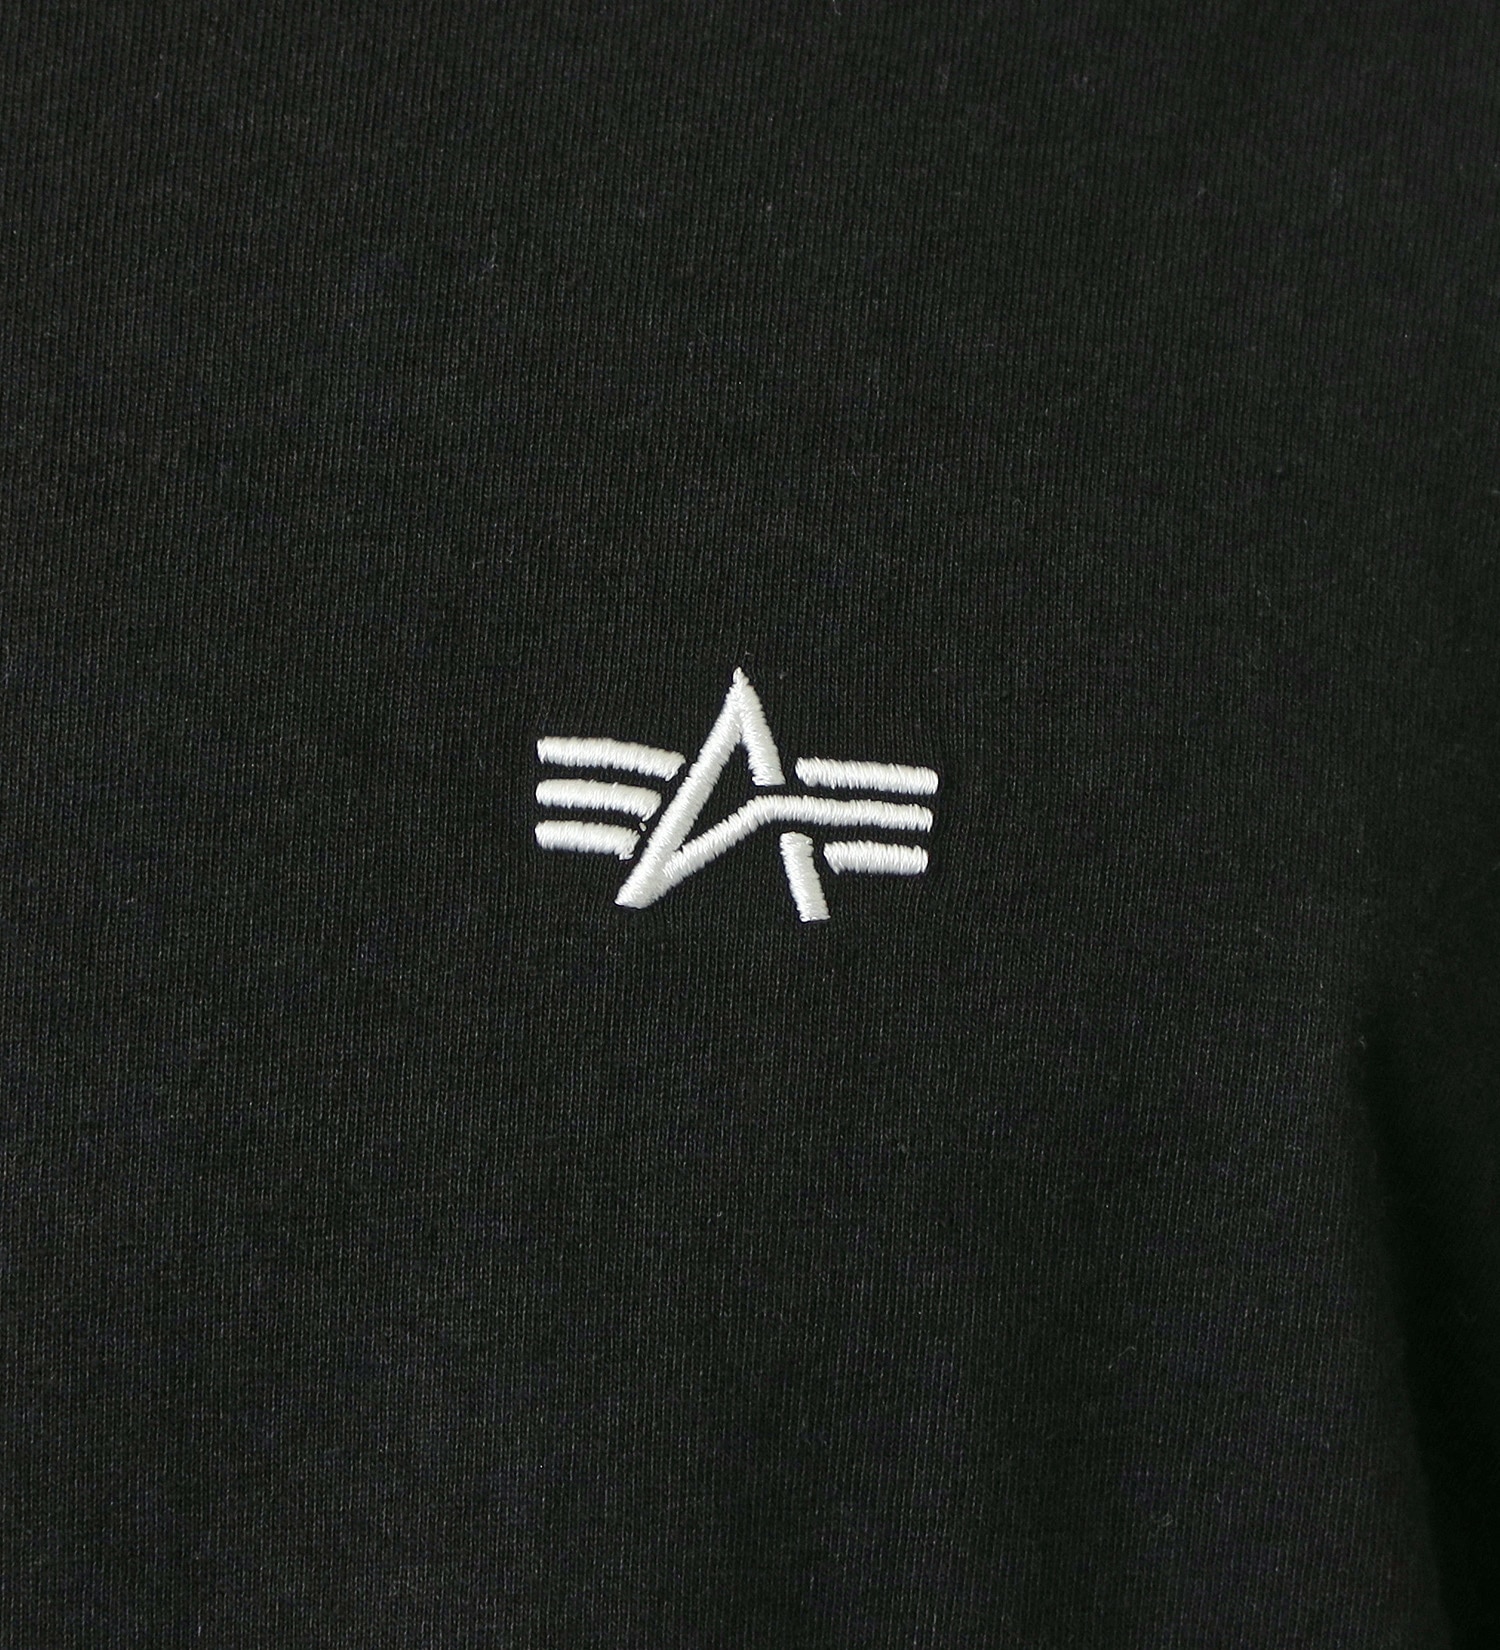 ALPHA(アルファ)の【GW SALE】【大きいサイズ】バックプリントボックスロゴ  長袖Tシャツ(カモ柄)|トップス/Tシャツ/カットソー/メンズ|ブラック